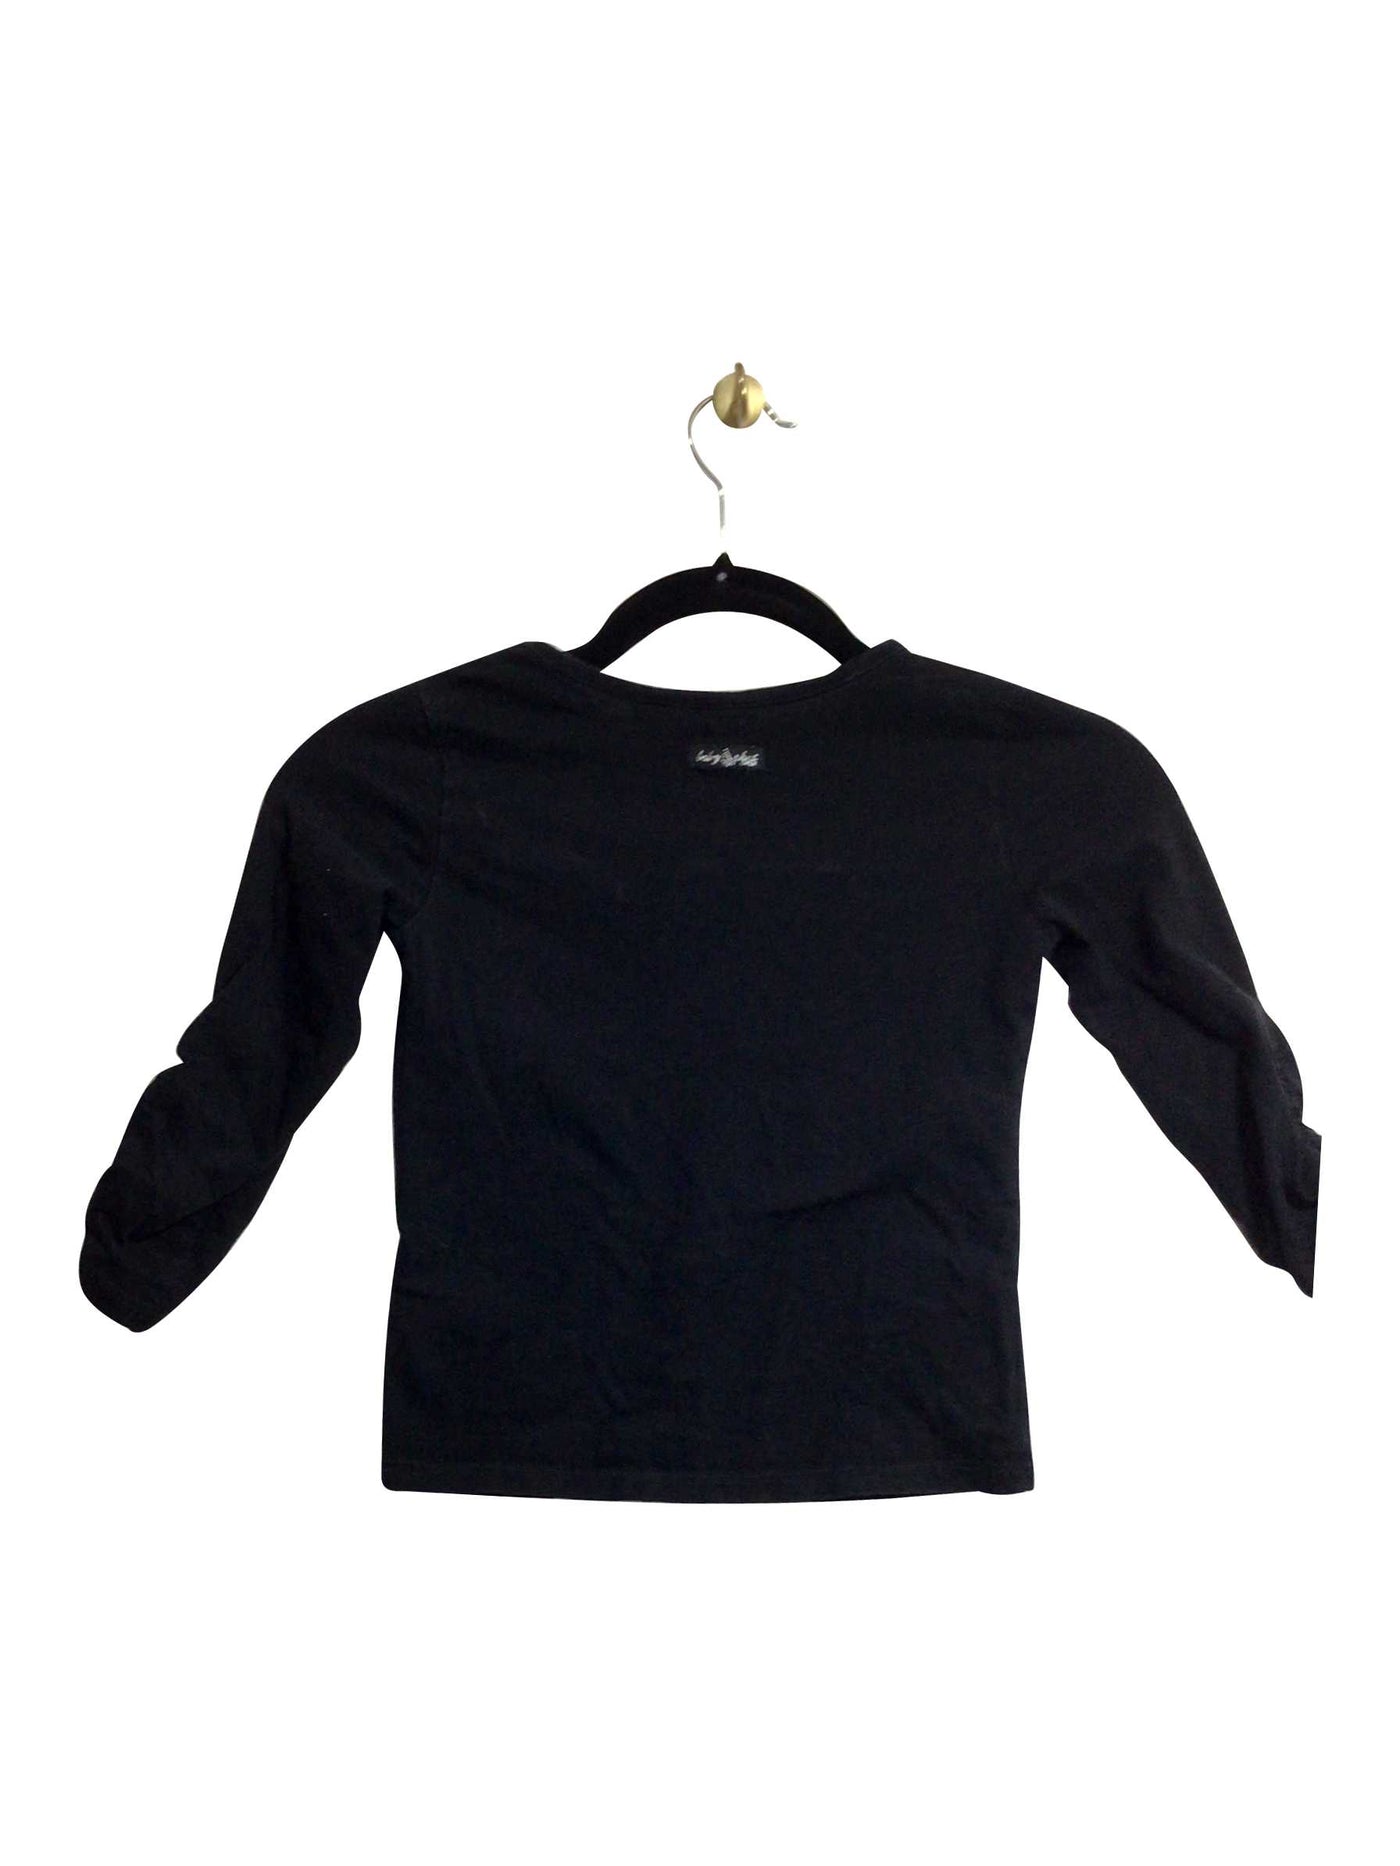 BABY PHAT Regular fit T-shirt in Black - Size 6X | 7.79 $ KOOP